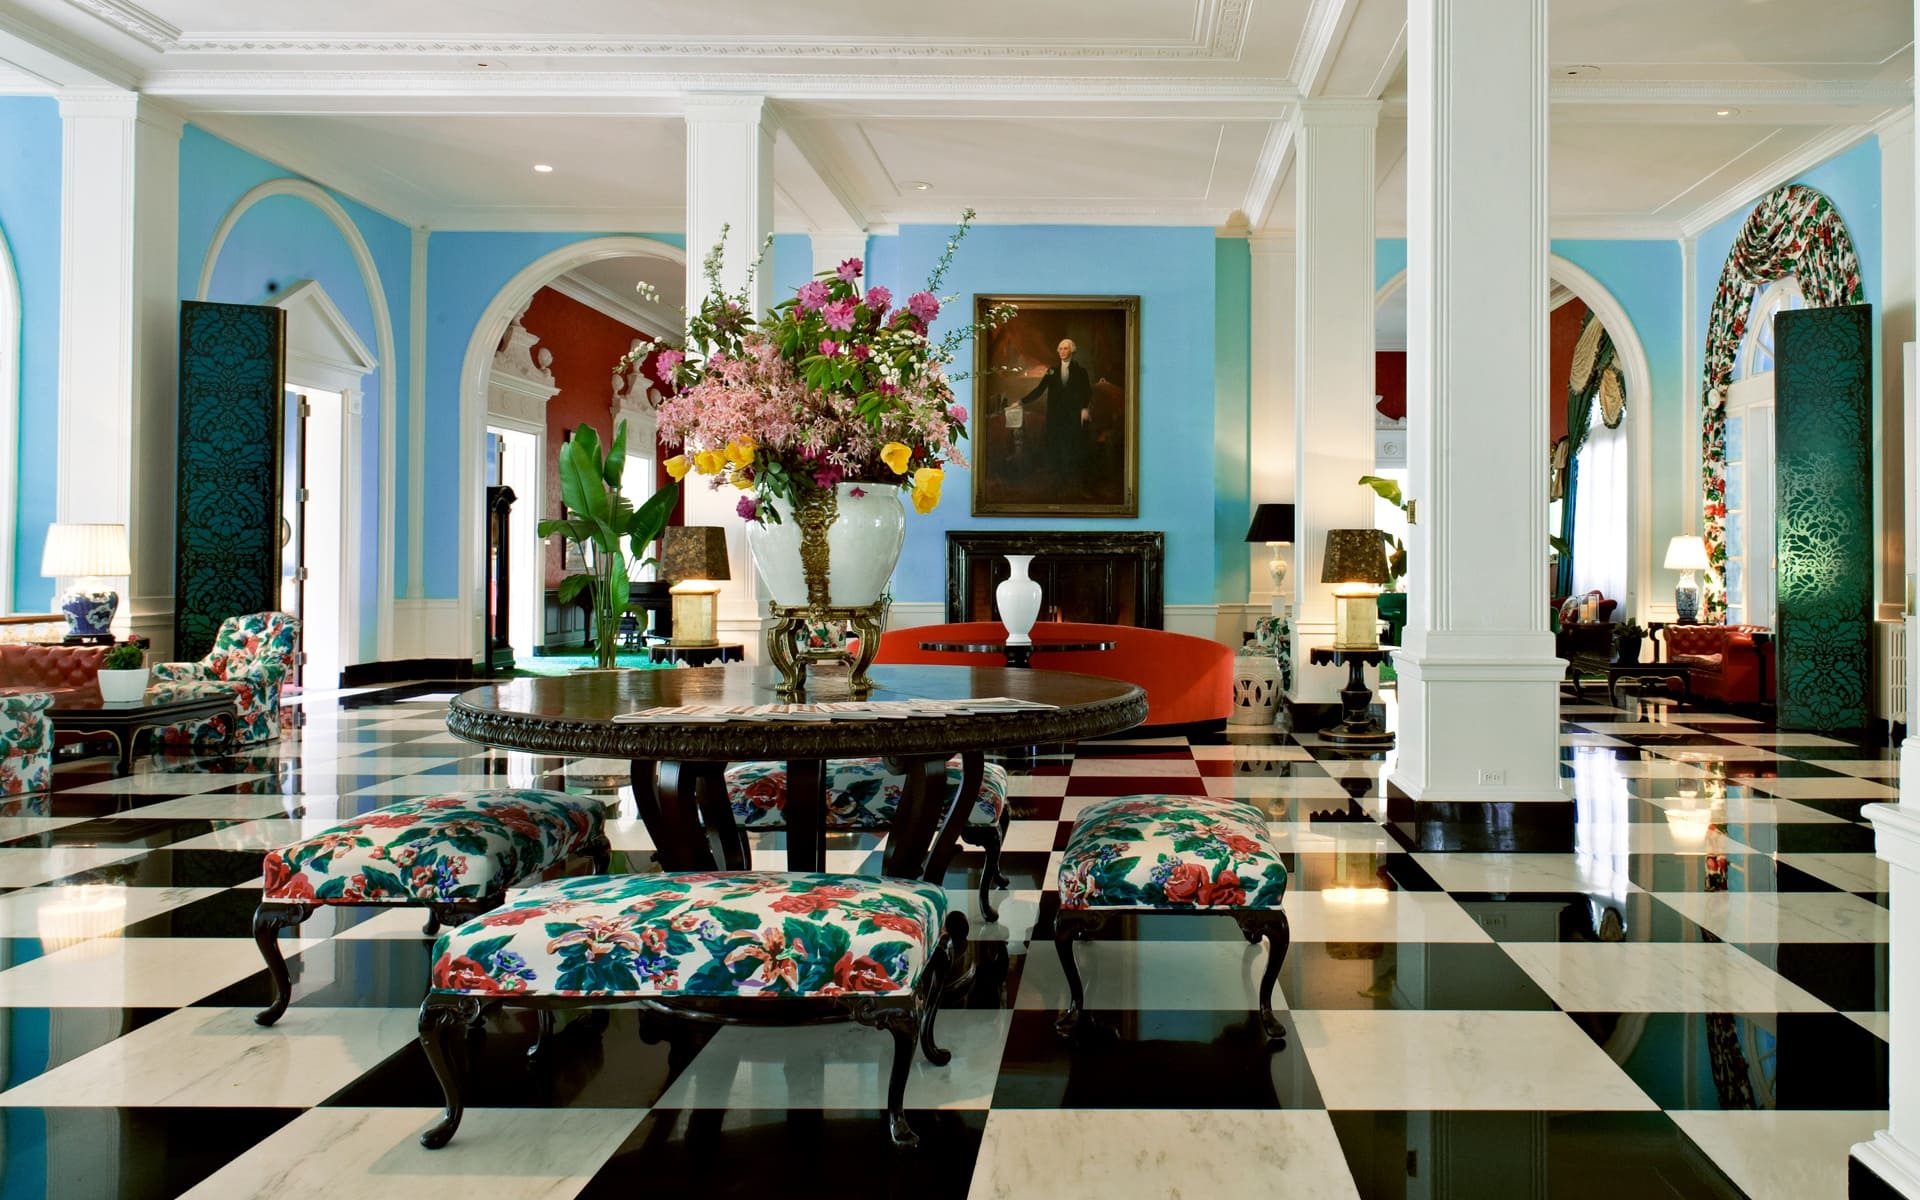 Hollywood regency style, hotel lobby by pioneer interior designer Dorothy Draper